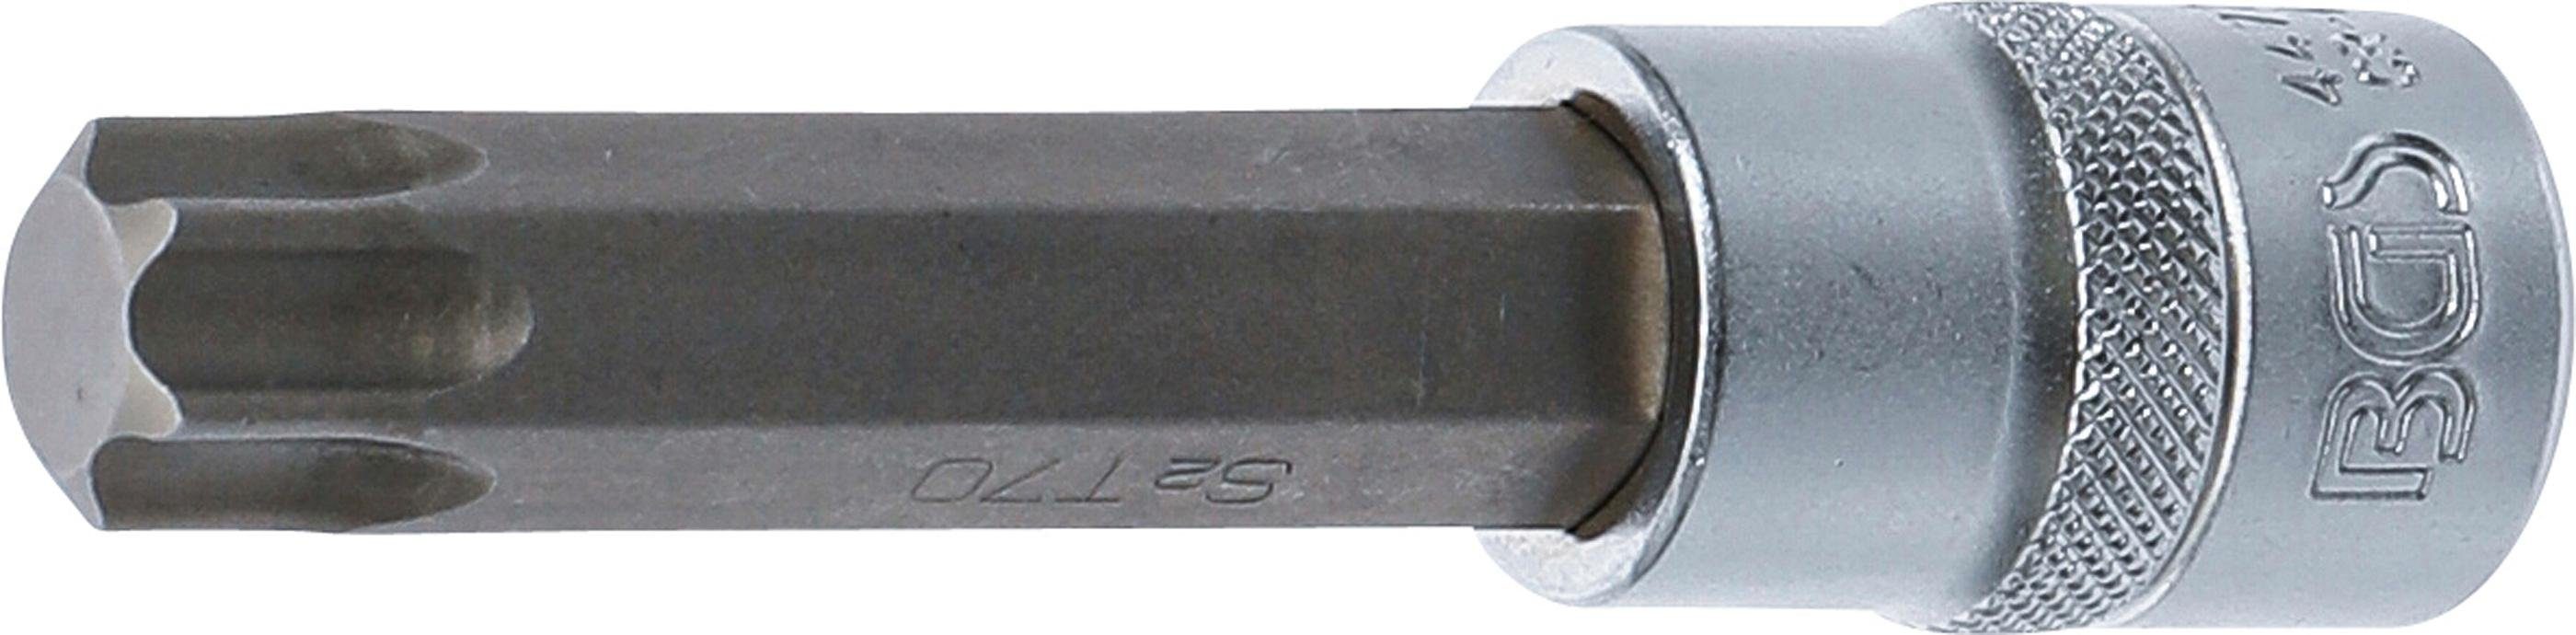 technic Antrieb mm, Innenvierkant BGS (für T-Profil Bit-Schraubendreher Torx) 100 T70 Länge 12,5 (1/2), mm Bit-Einsatz,